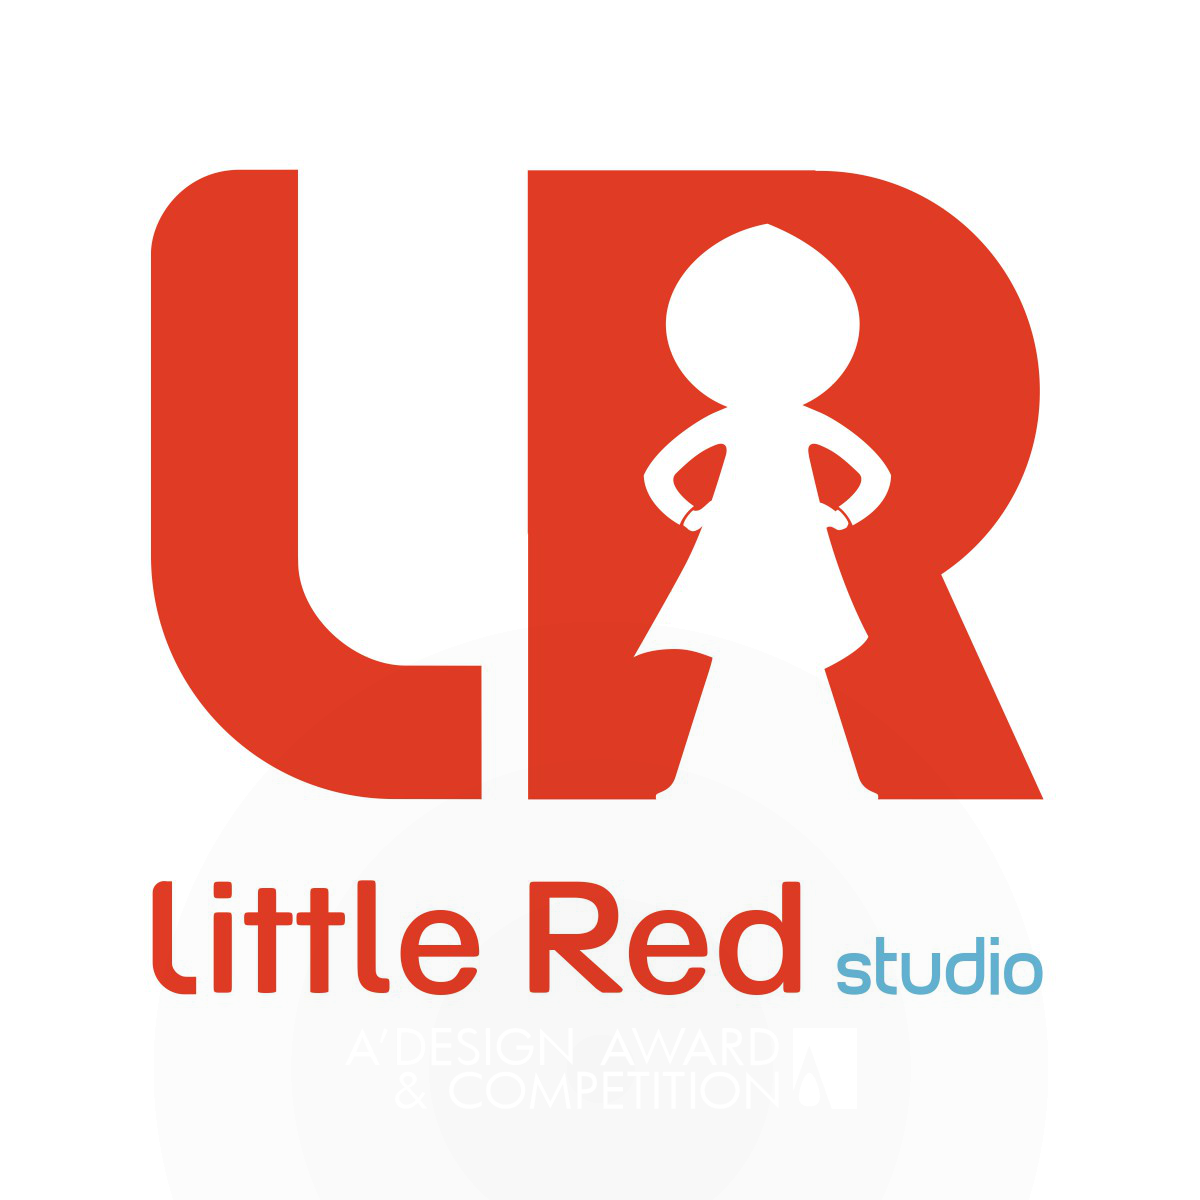 Little Red studio